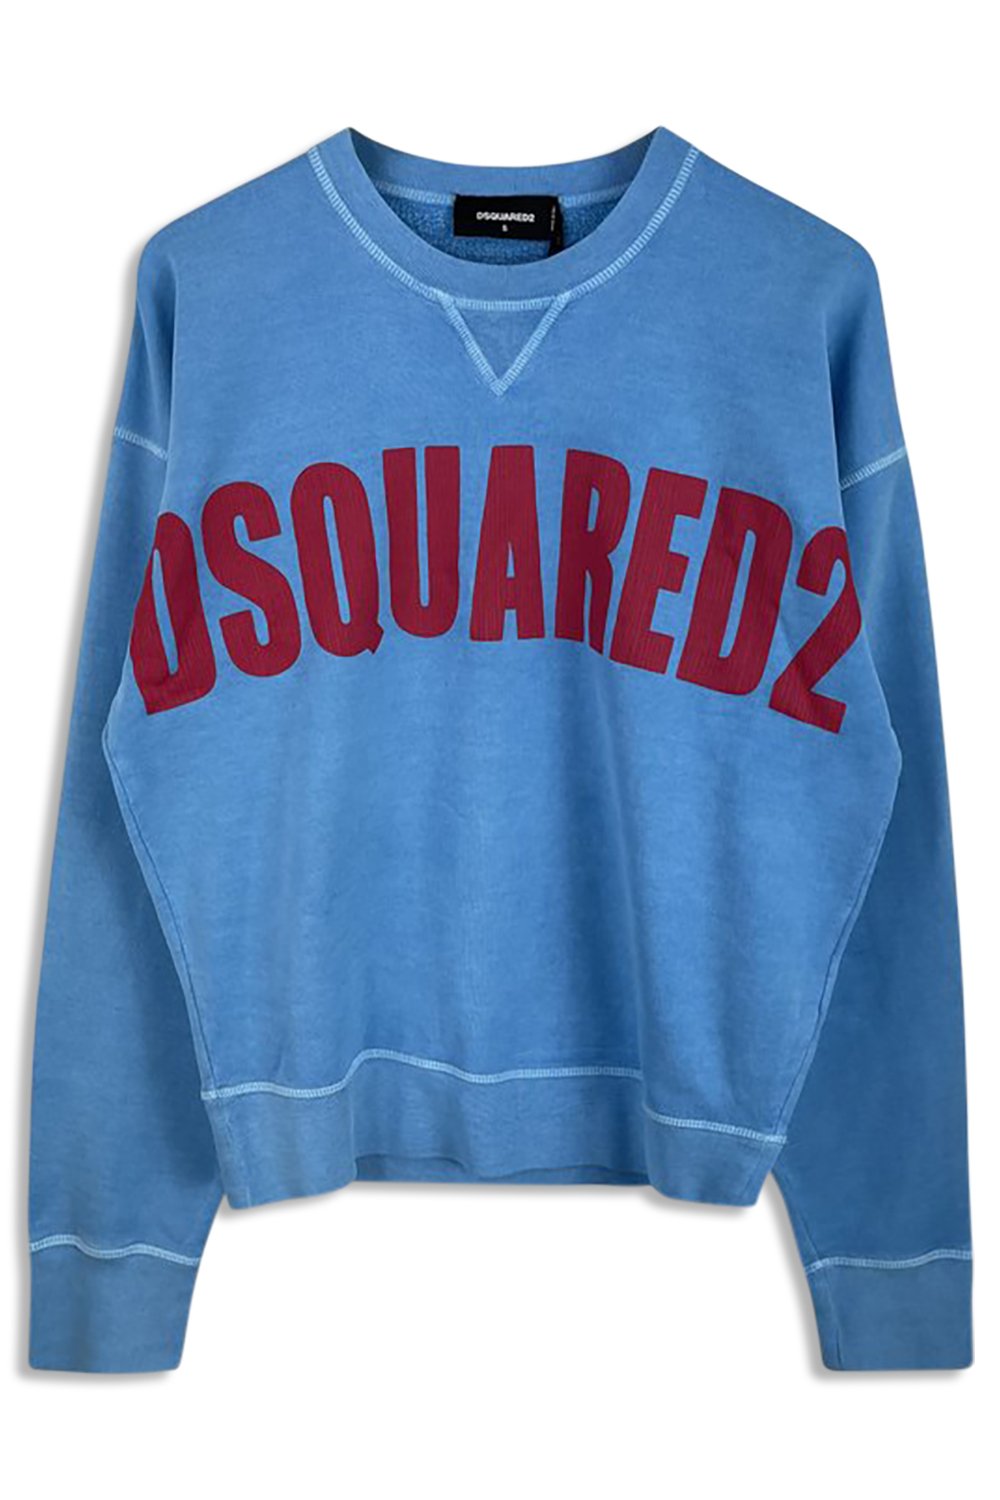 Men's DSquared2 Blue Printed Oversized Sweatshirt